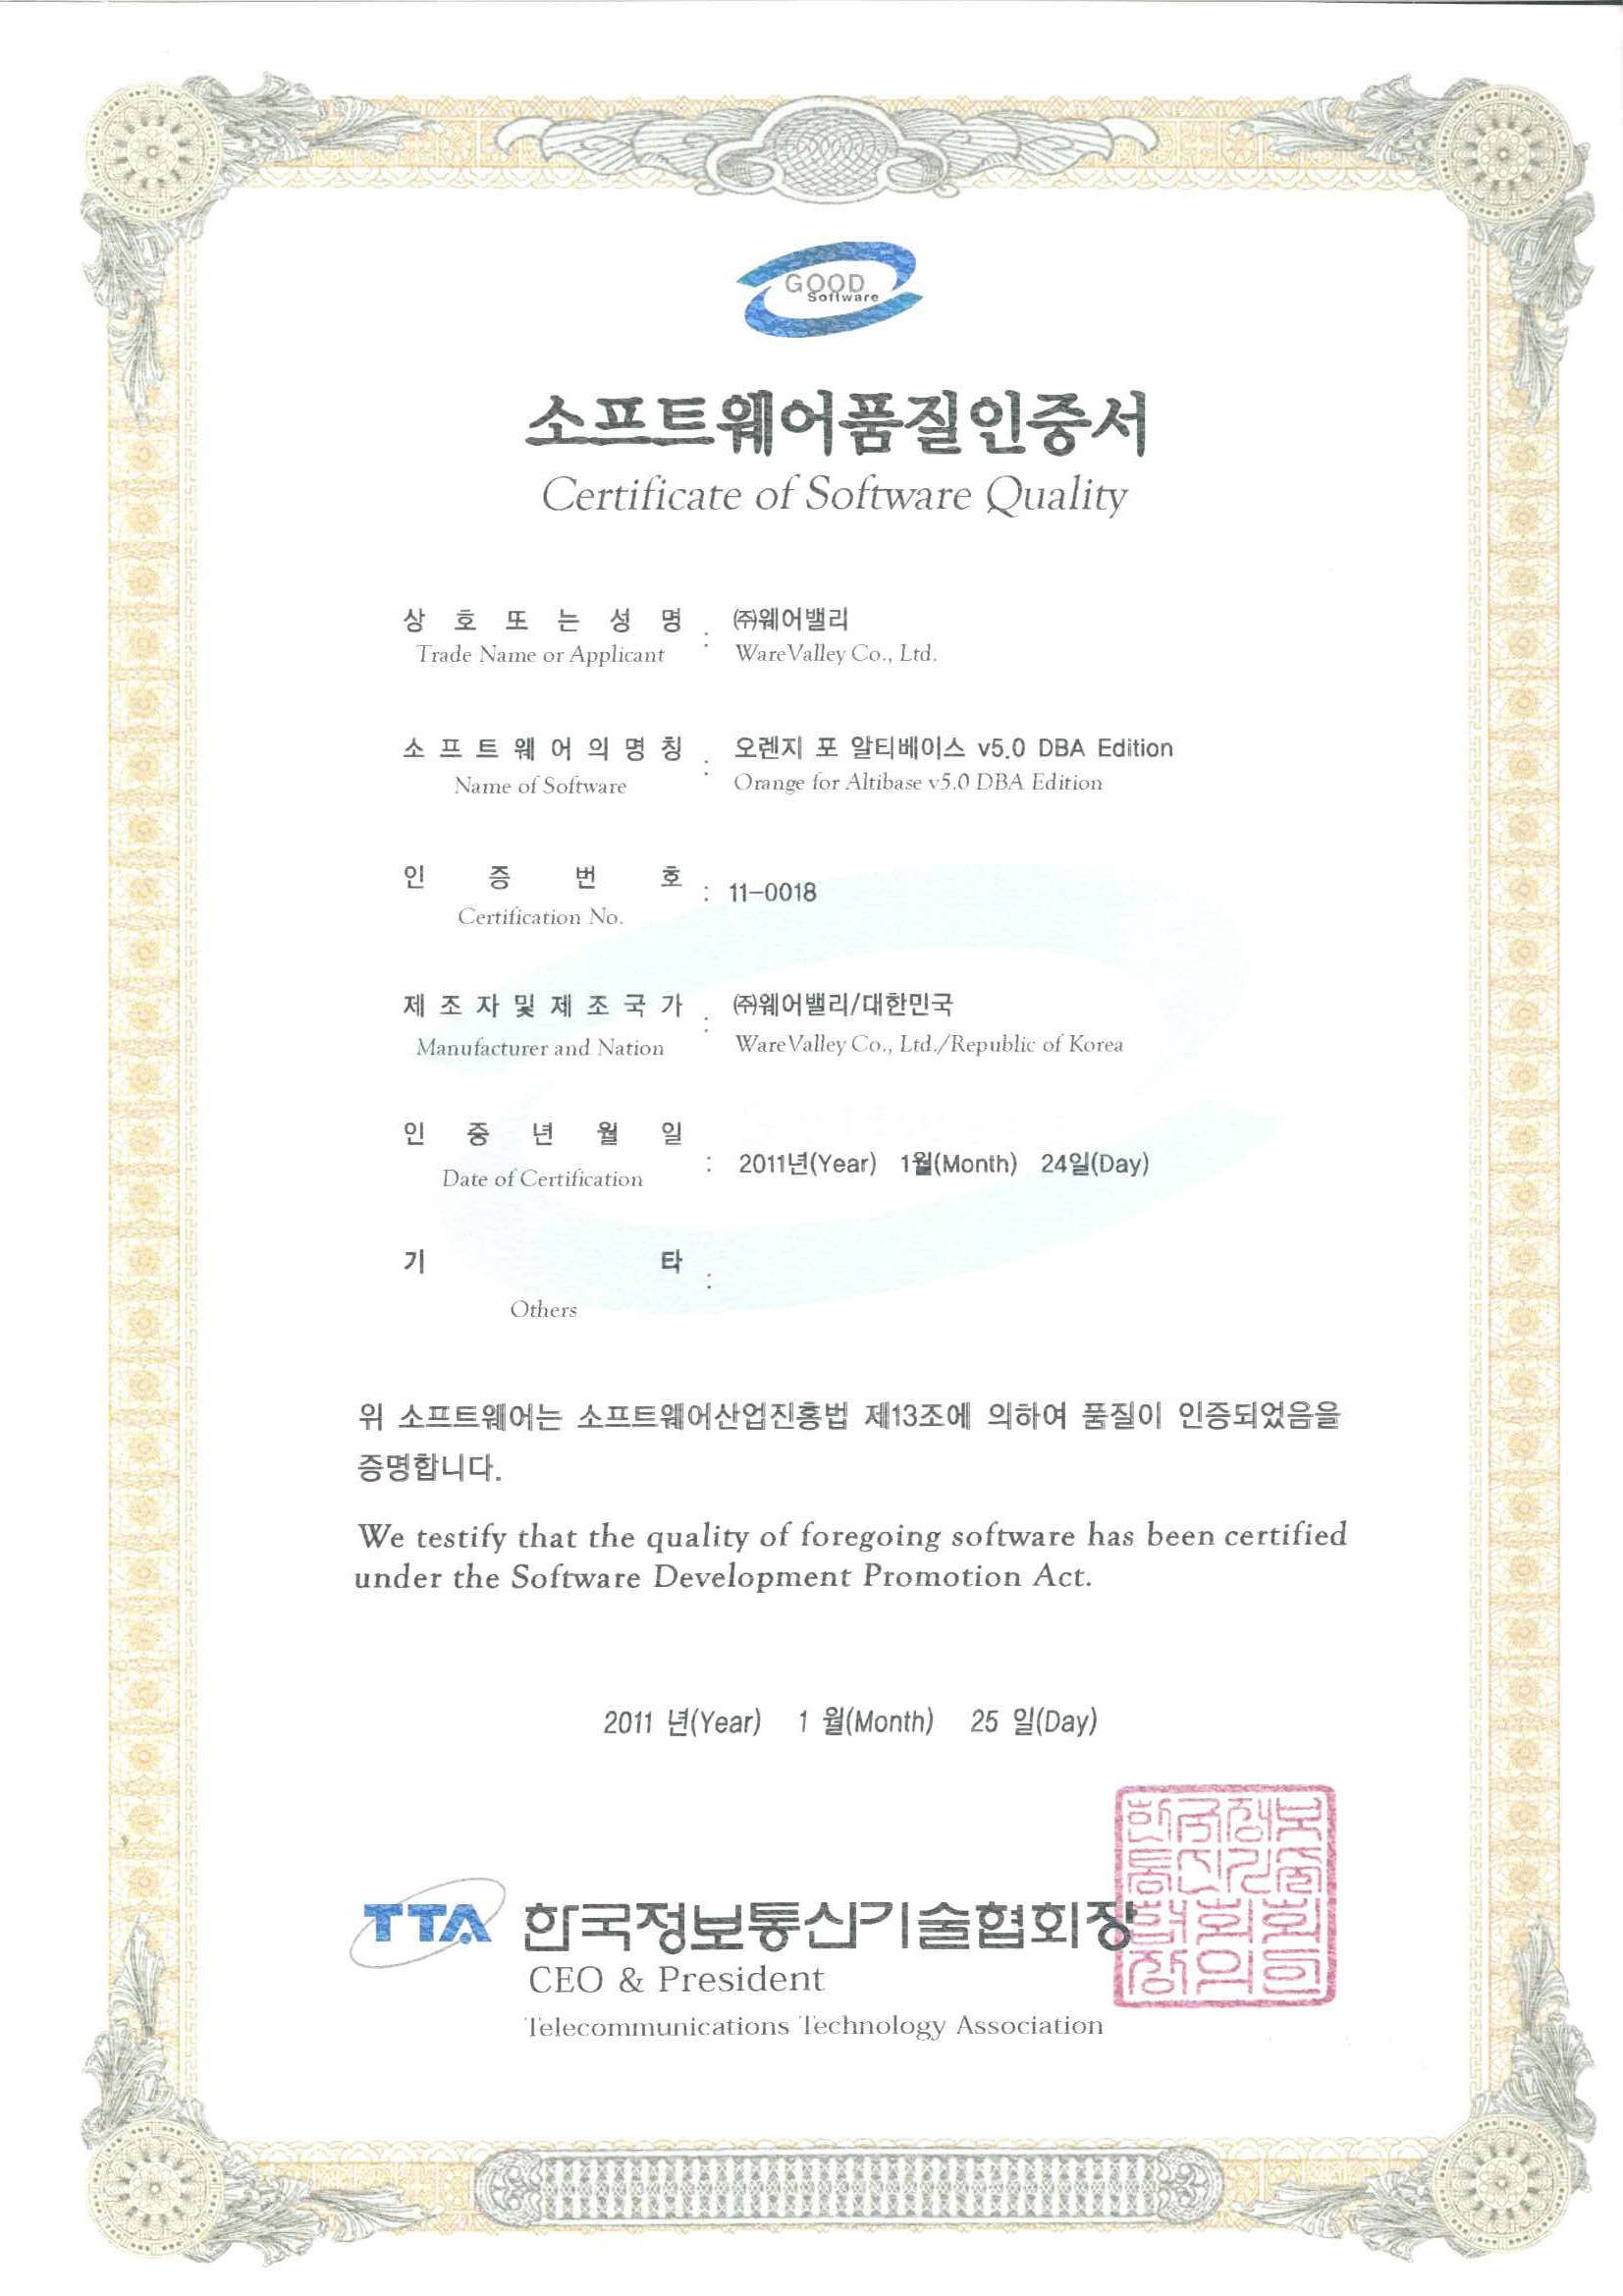 GS certification 11-0018